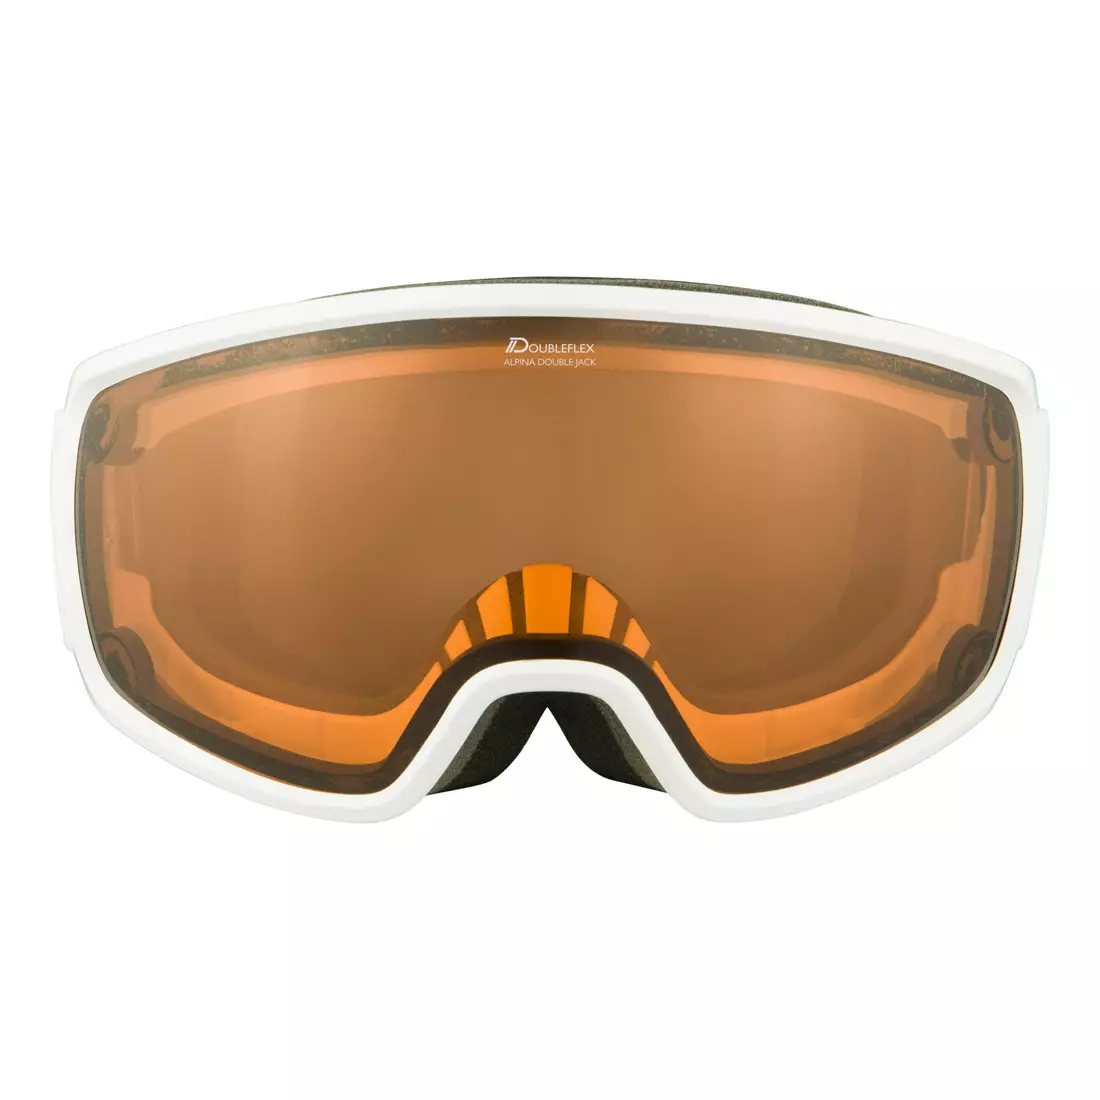 ALPINA DOUBLE JACK MAG Q-LITE lyžiarske/snowboardové okuliare, white gloss